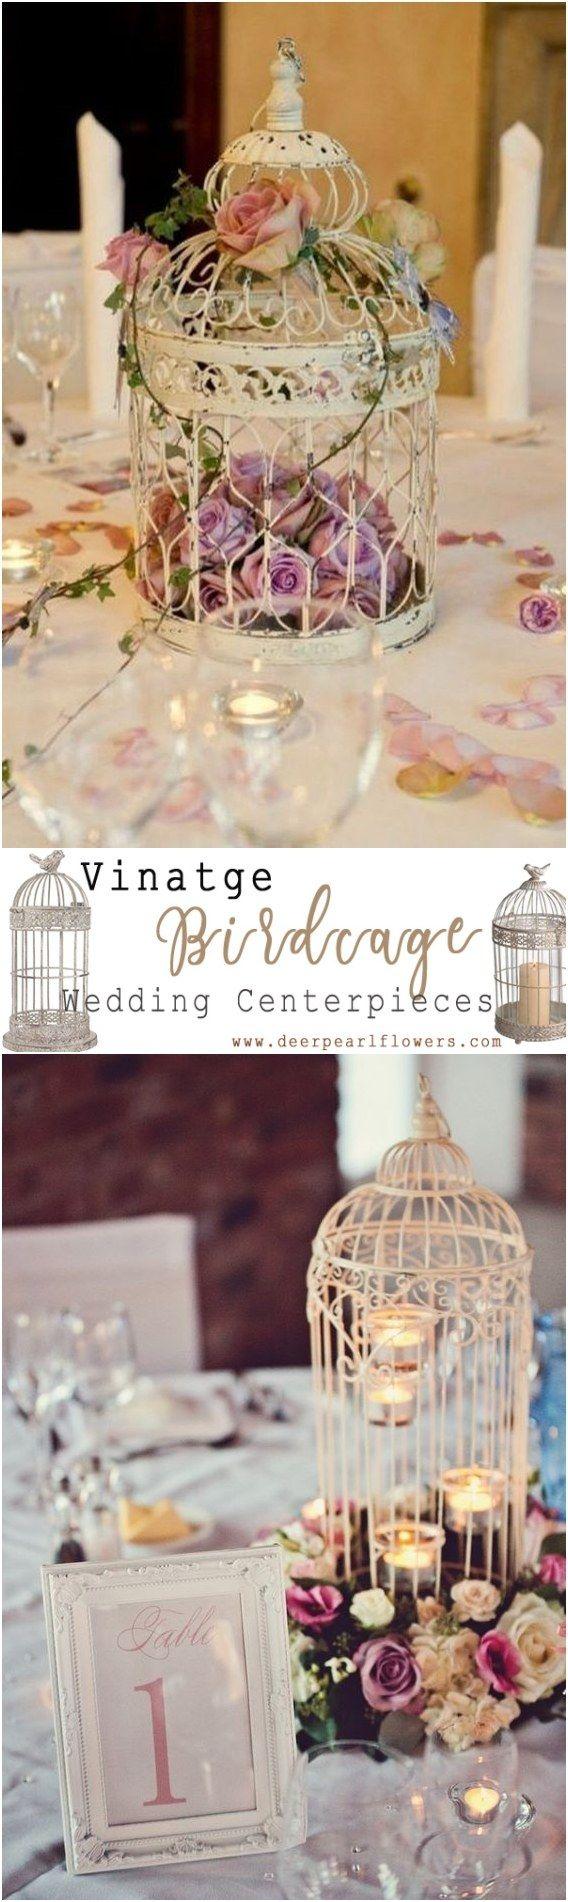 Wedding - Top 20 Vintage Birdcage Wedding Centerpieces For 2018